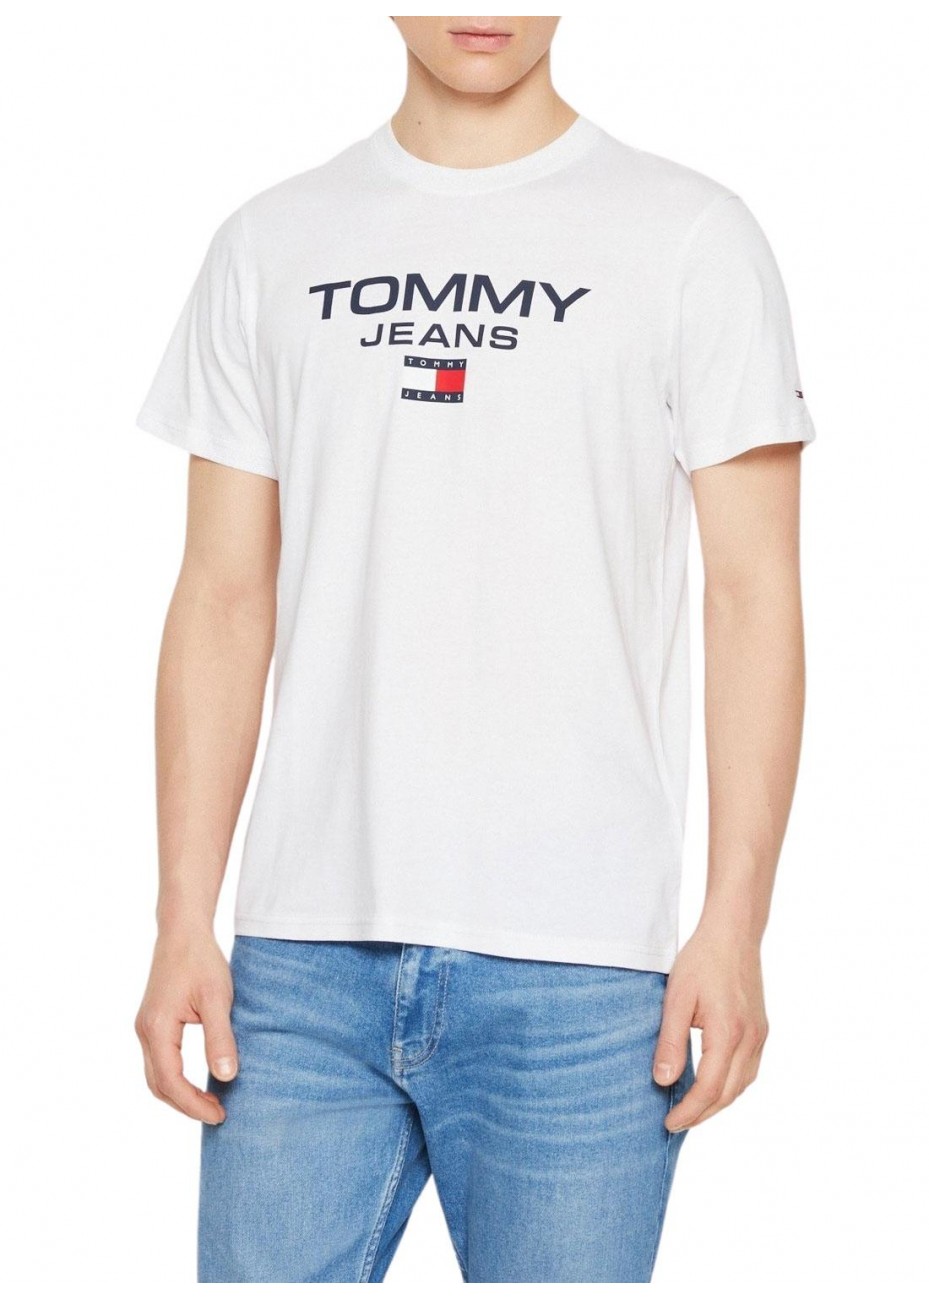 Camiseta Tommy Jeans Classic blanca  logo azul marino